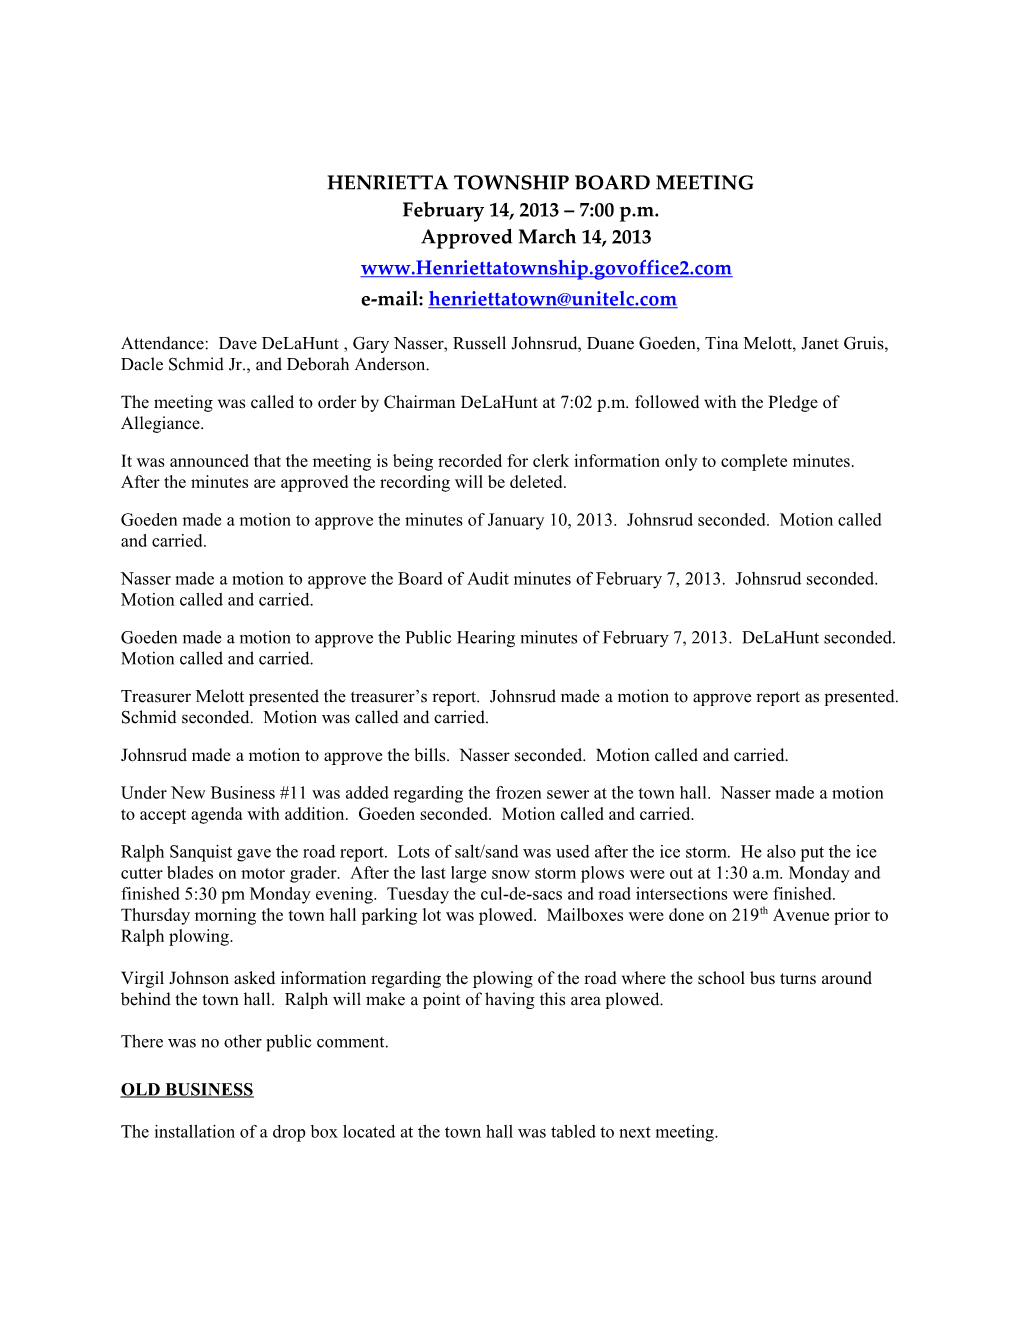 HENRIETTA TOWNSHIP BOARD MEETING February 14, 2013 7:00 P.M